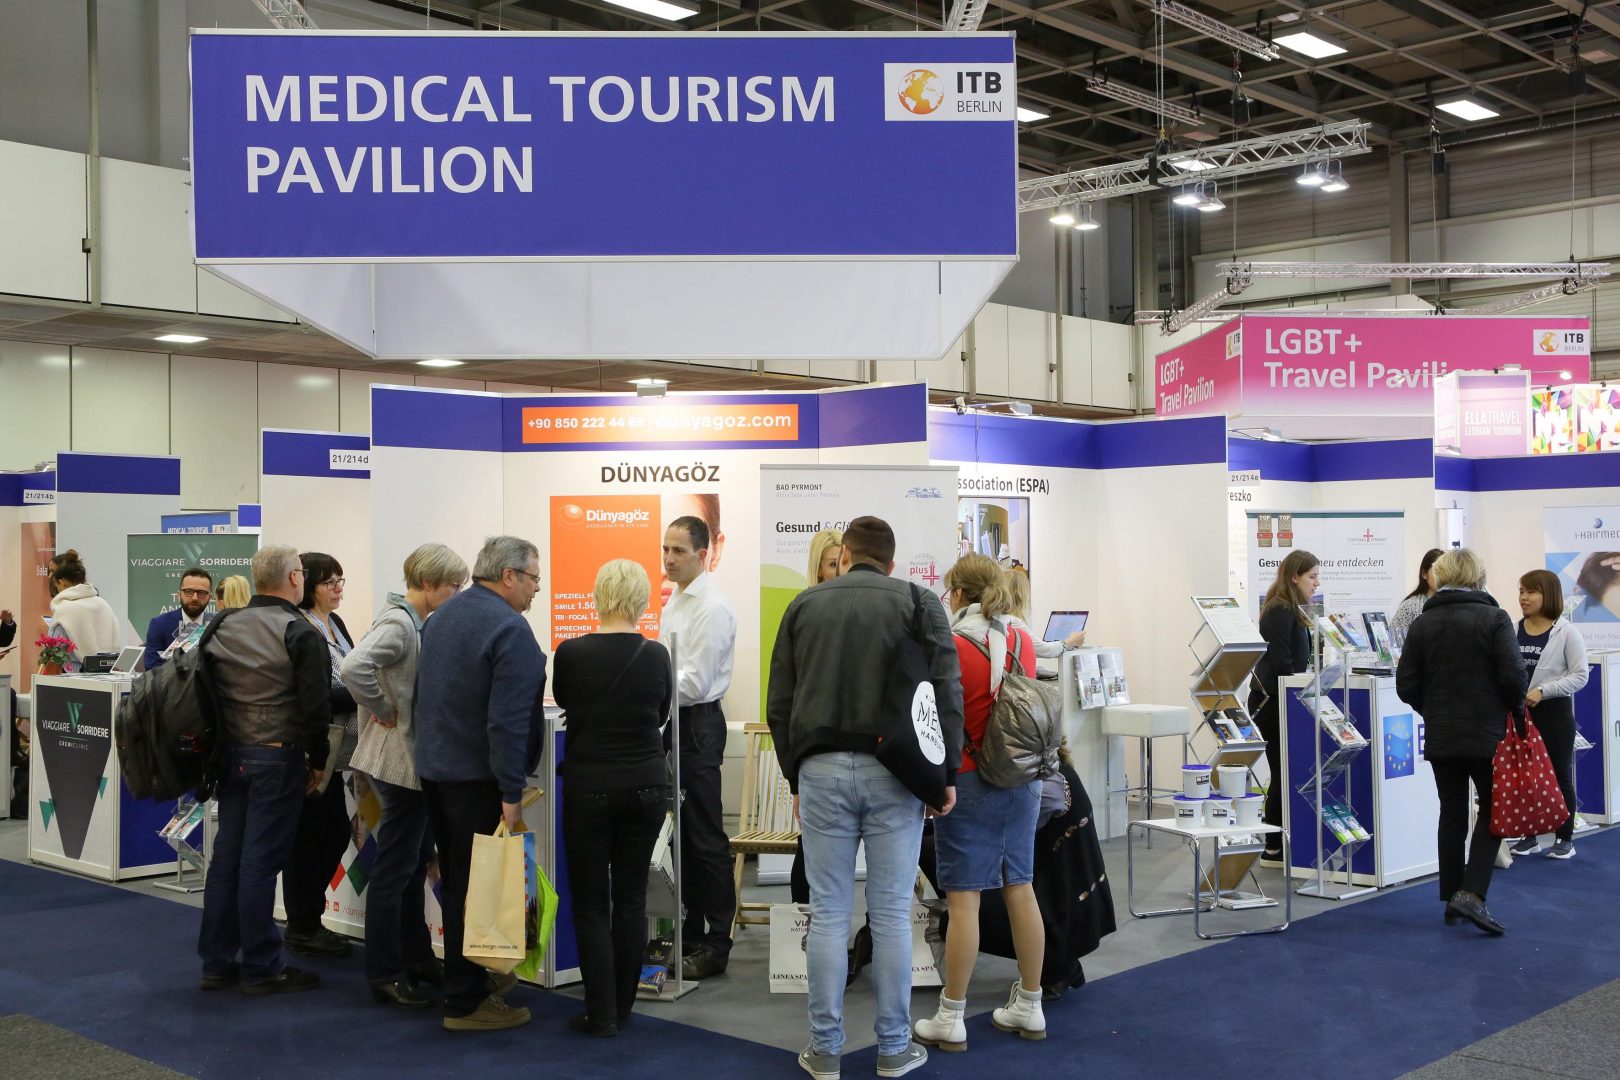 ITB Medical Tourism